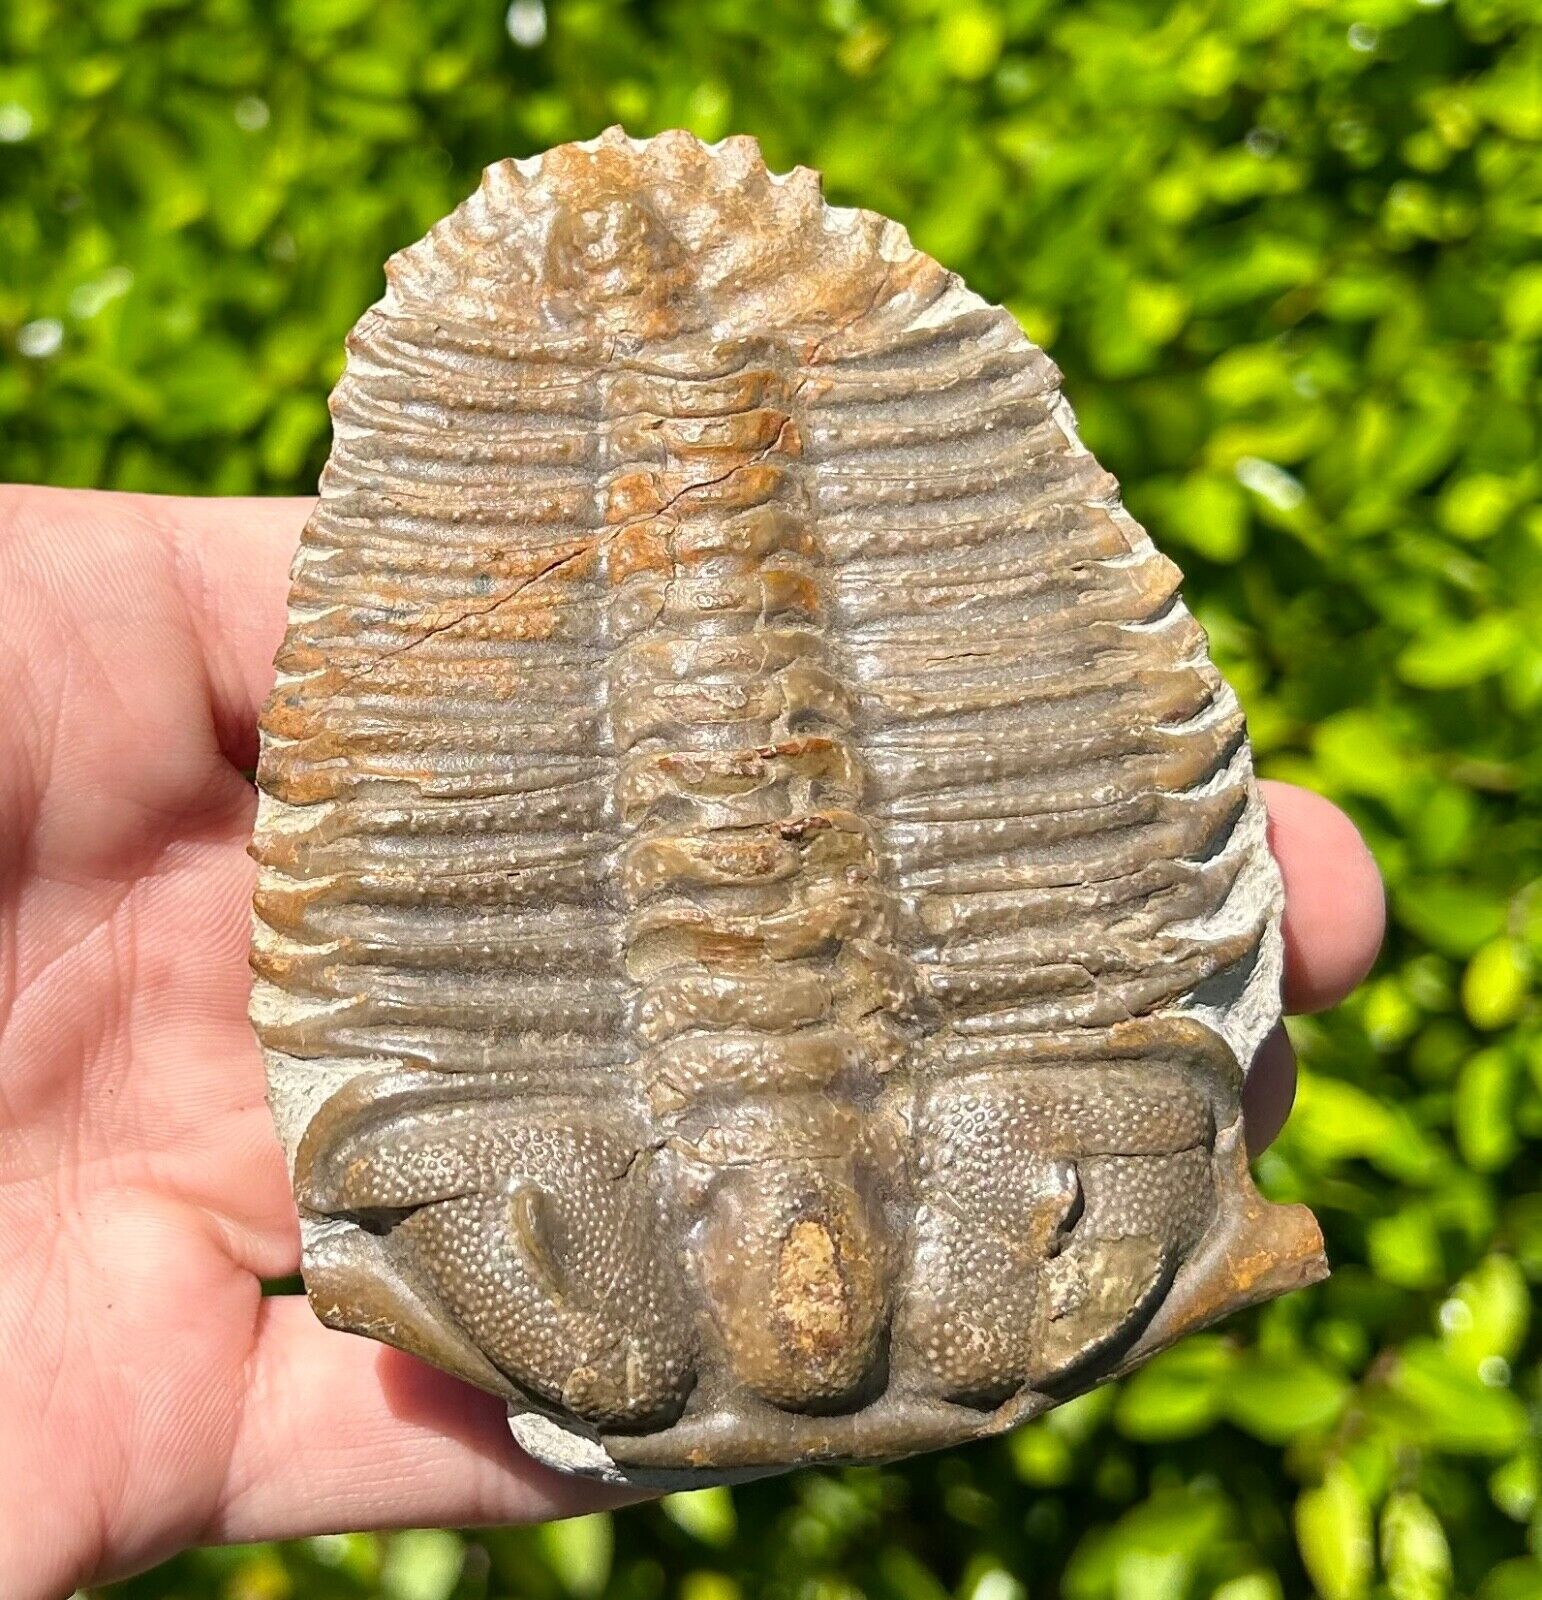 HUGE Damesella paronai Fossil Trilobite China Cambrian Age RARE Bug Damsellidae